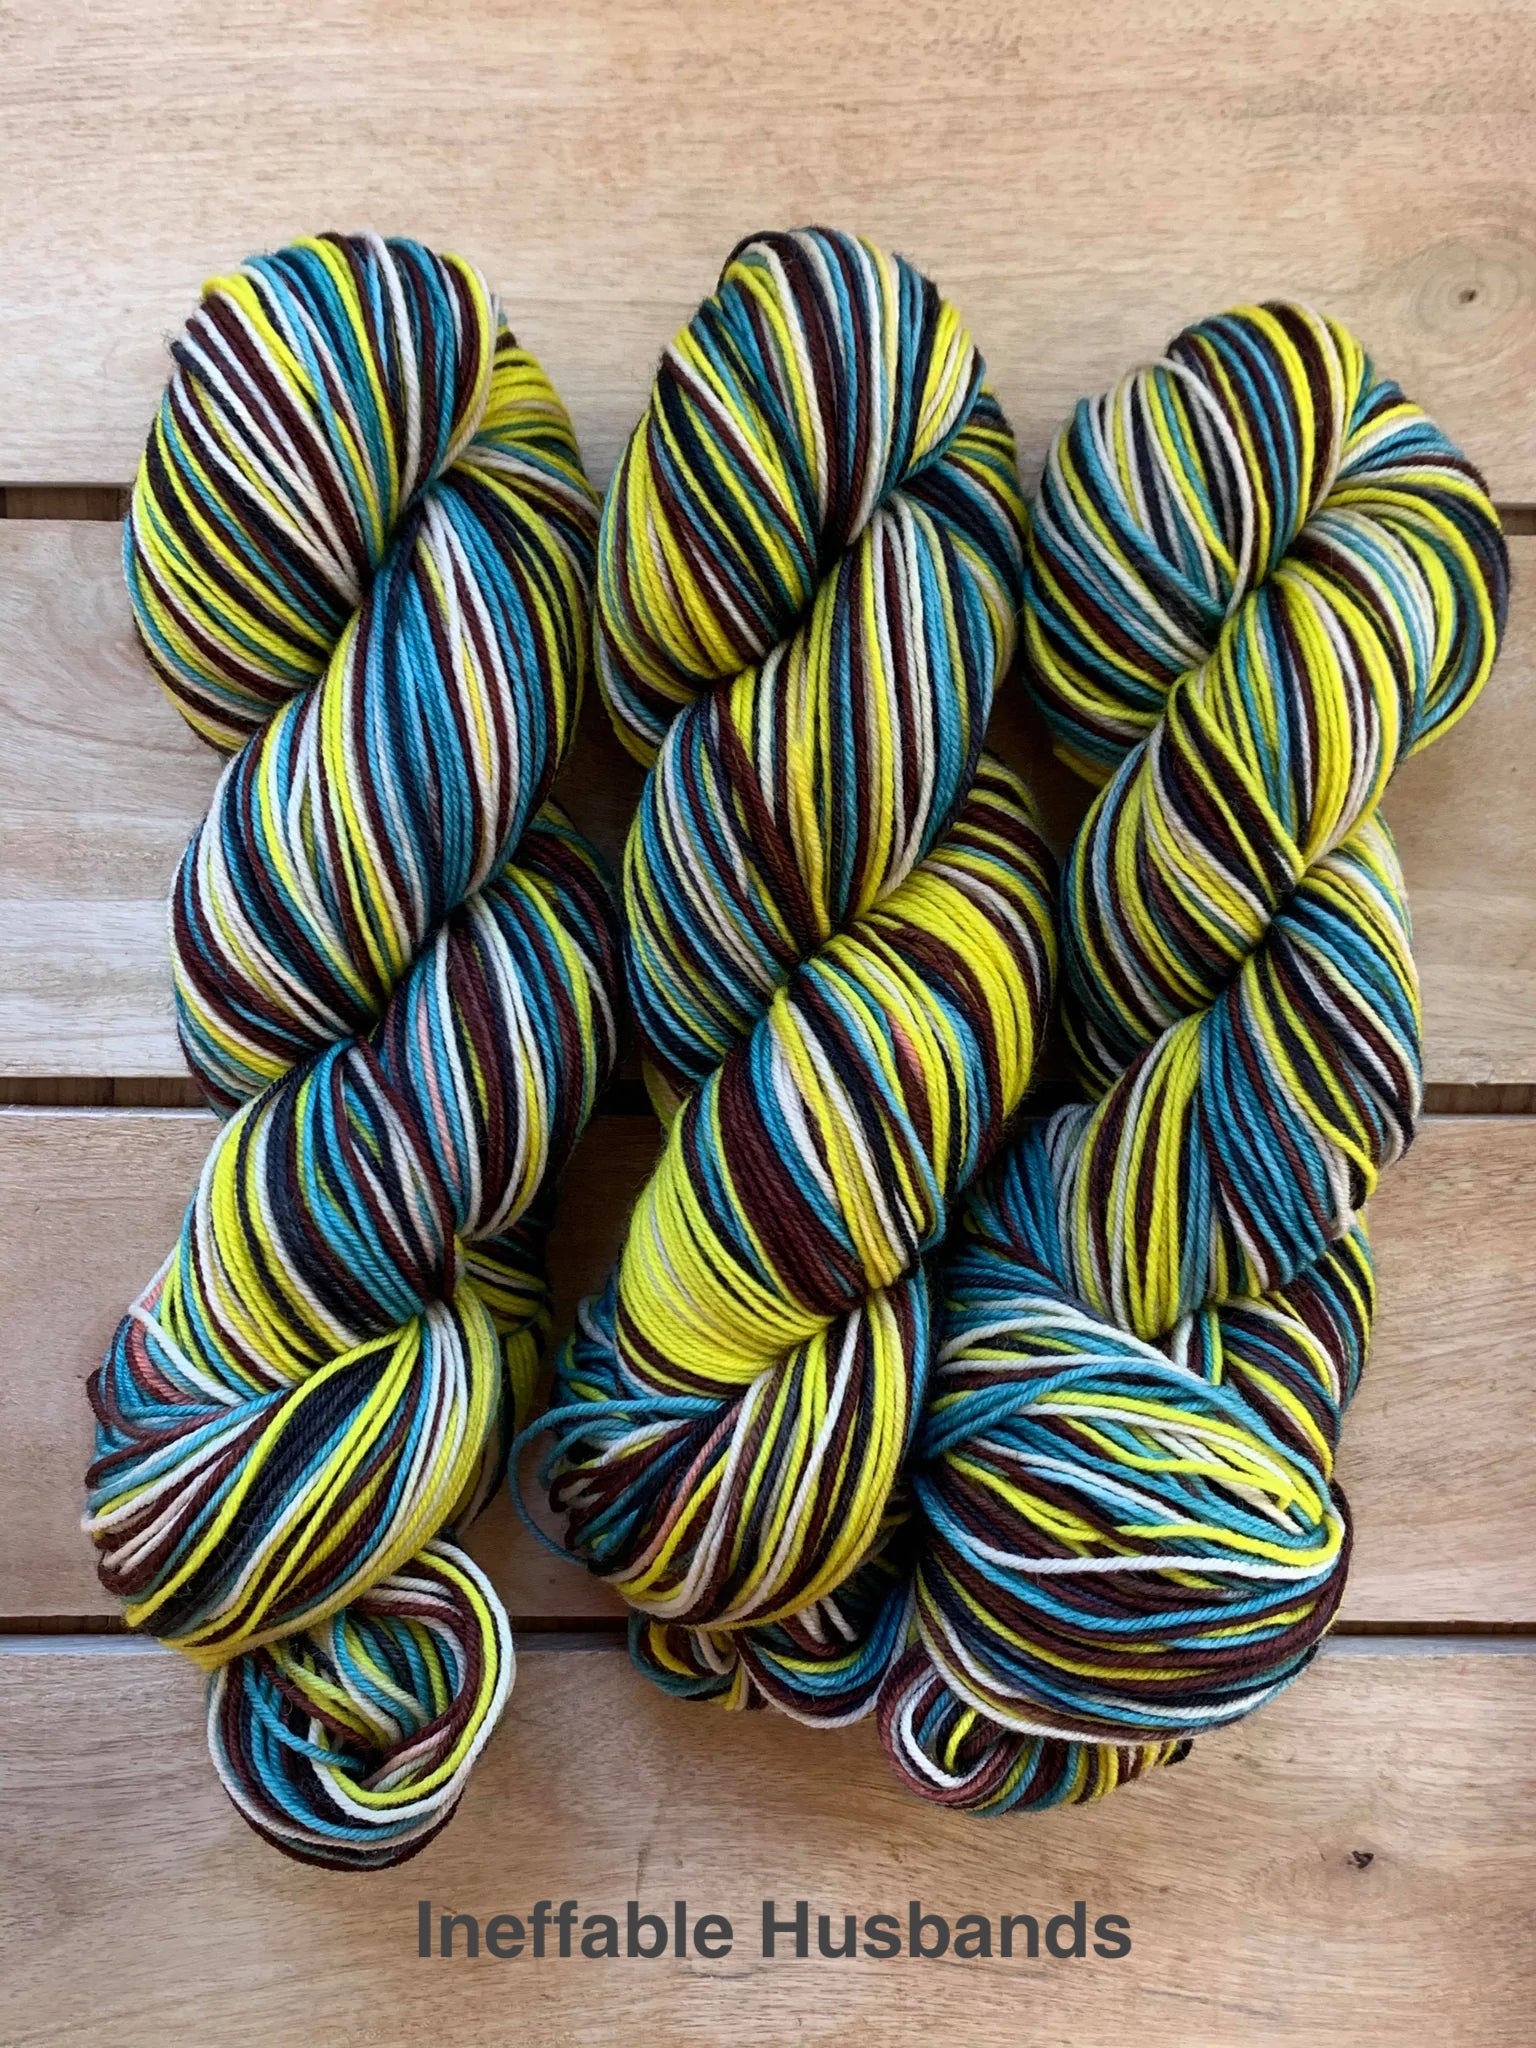 Goblin King - Self-Striping Yarn – Geektastic Fibers